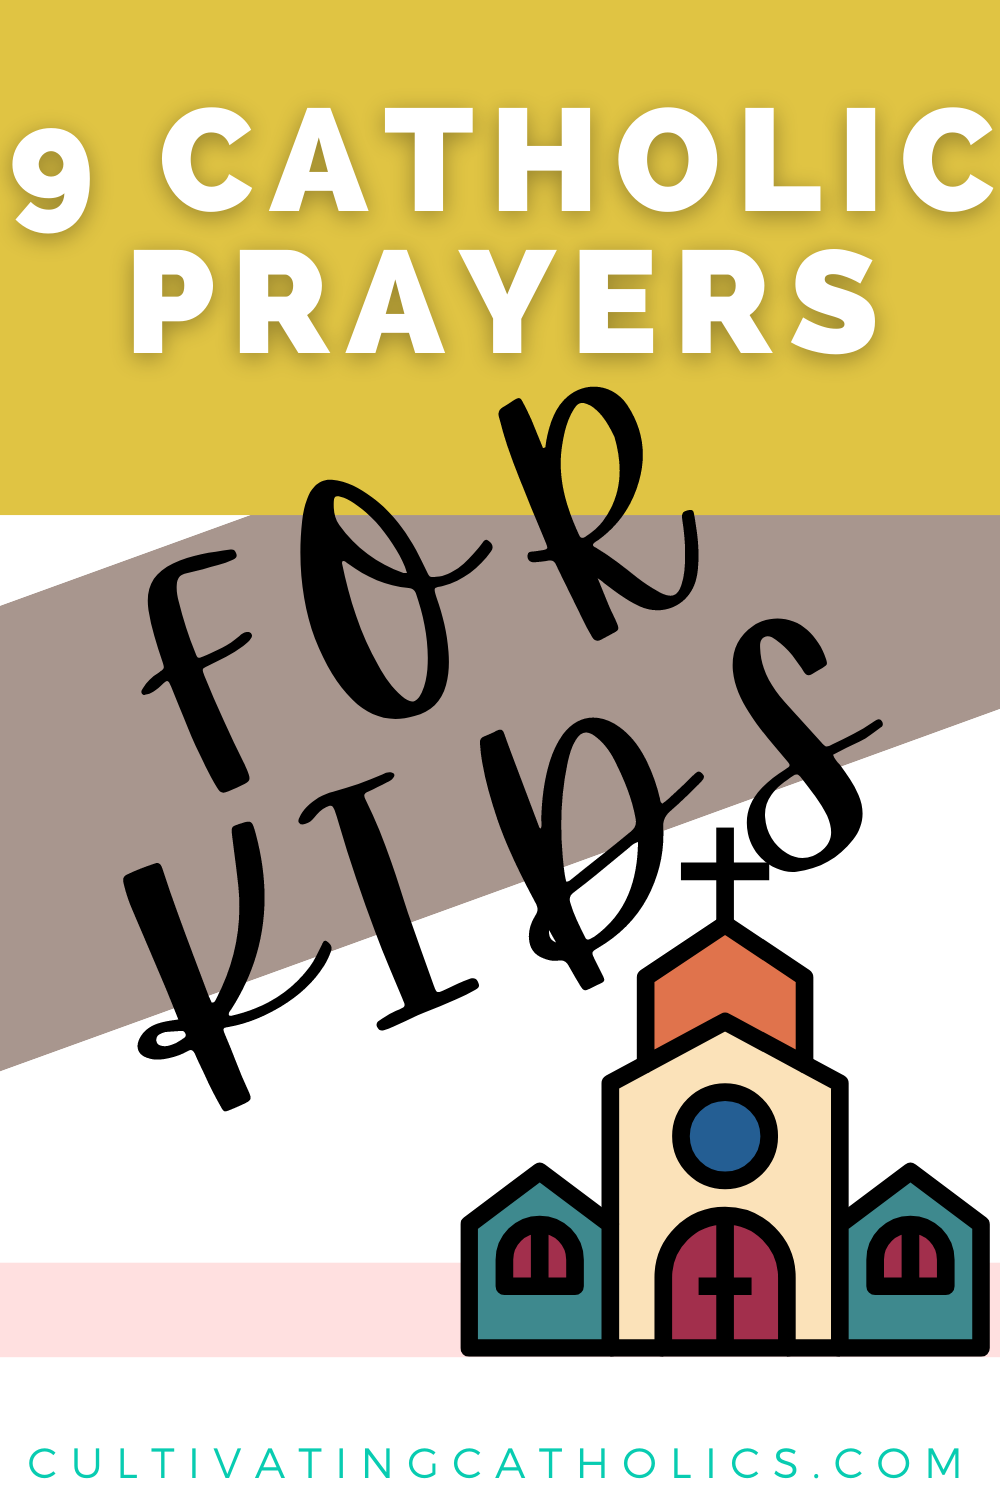 praying the rosary for kids worksheet